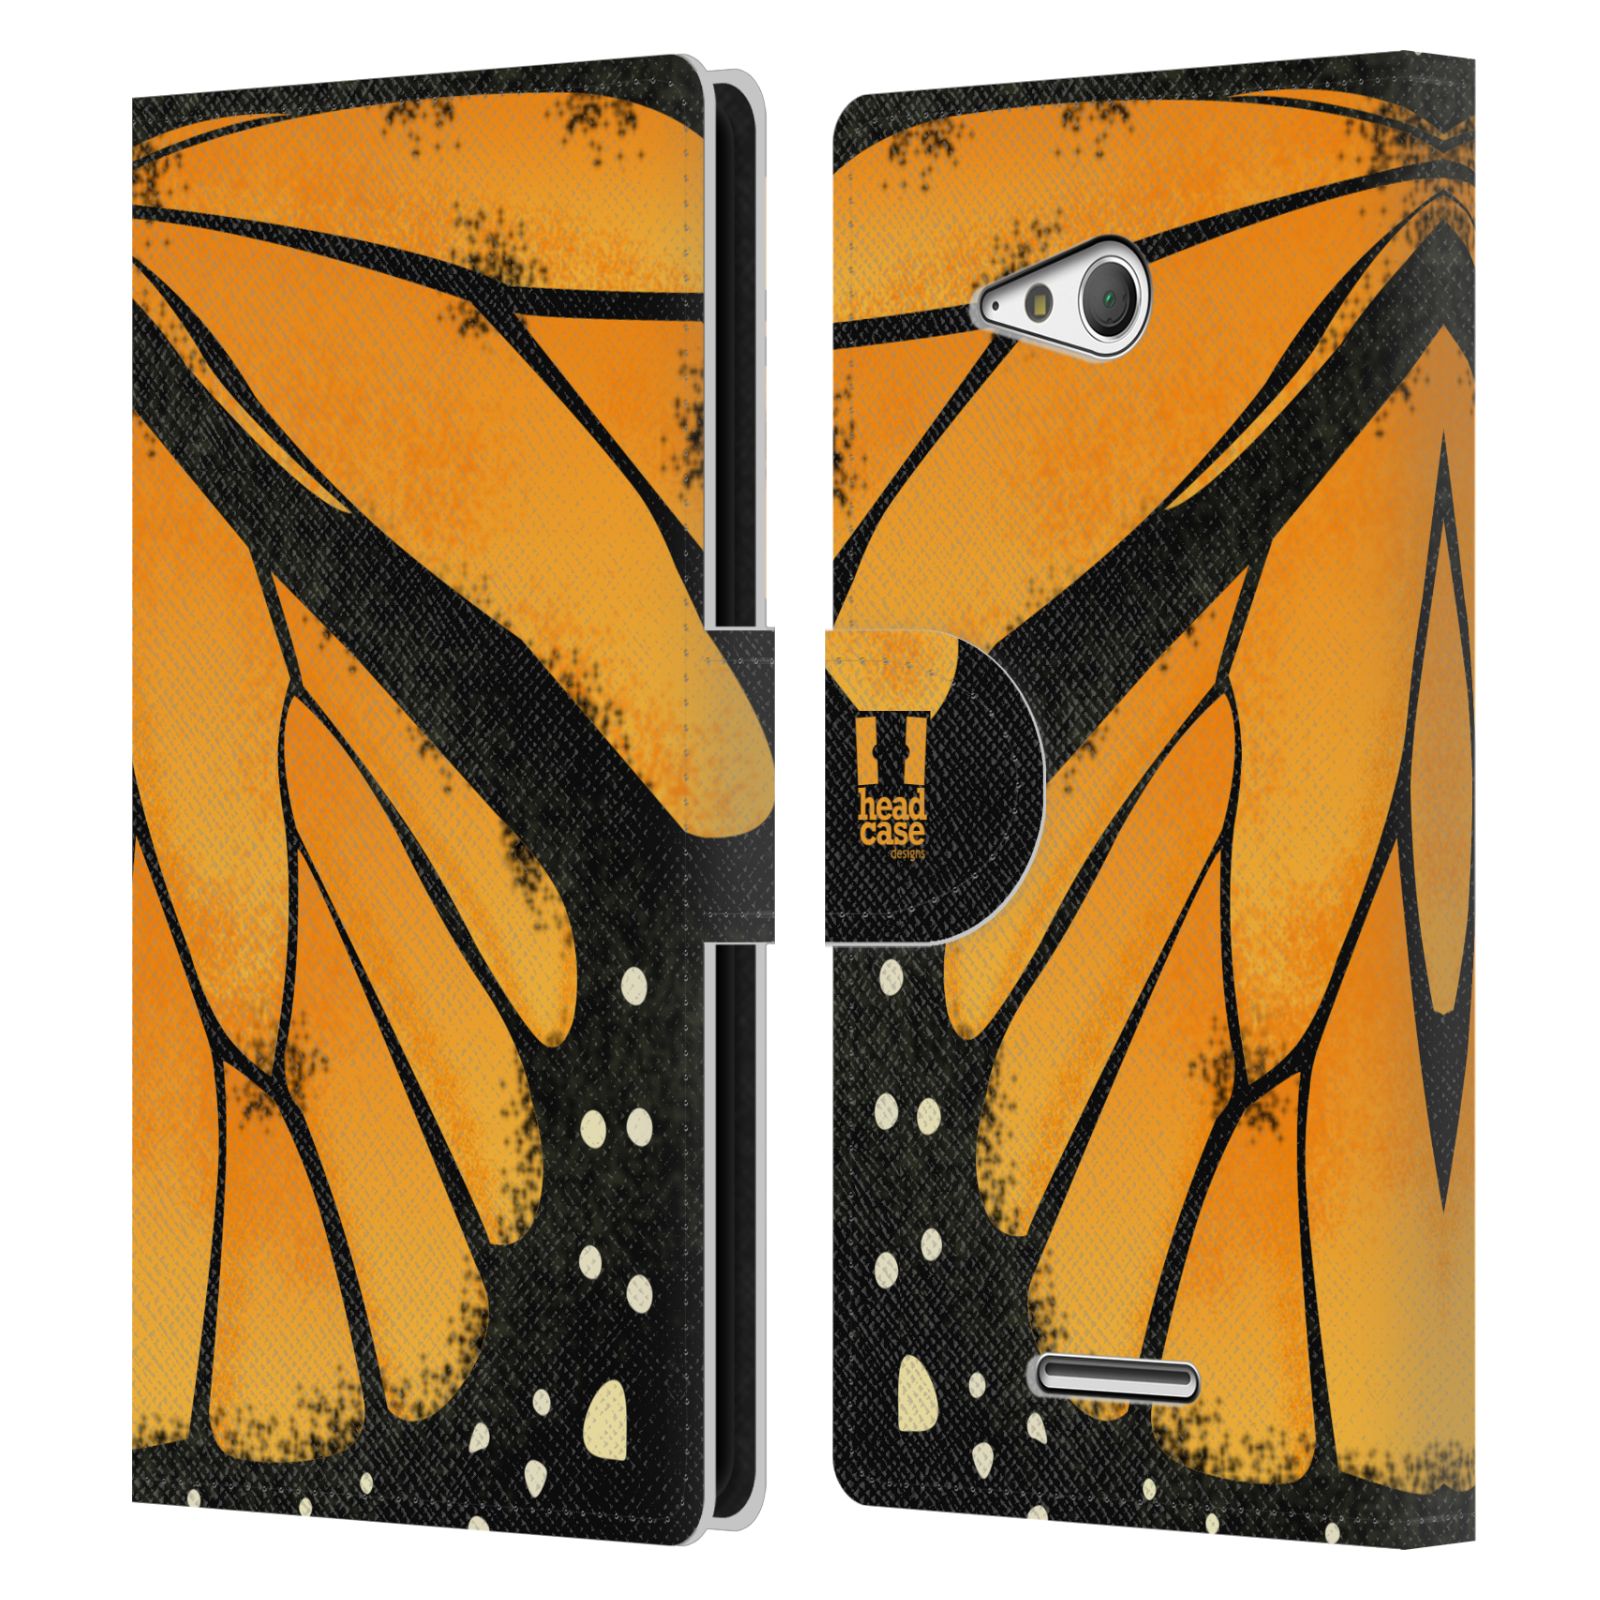 HEAD CASE Flipové pouzdro pro mobil SONY XPERIA E4g motýl a křídla kreslený vzor MONARCHA žlutá